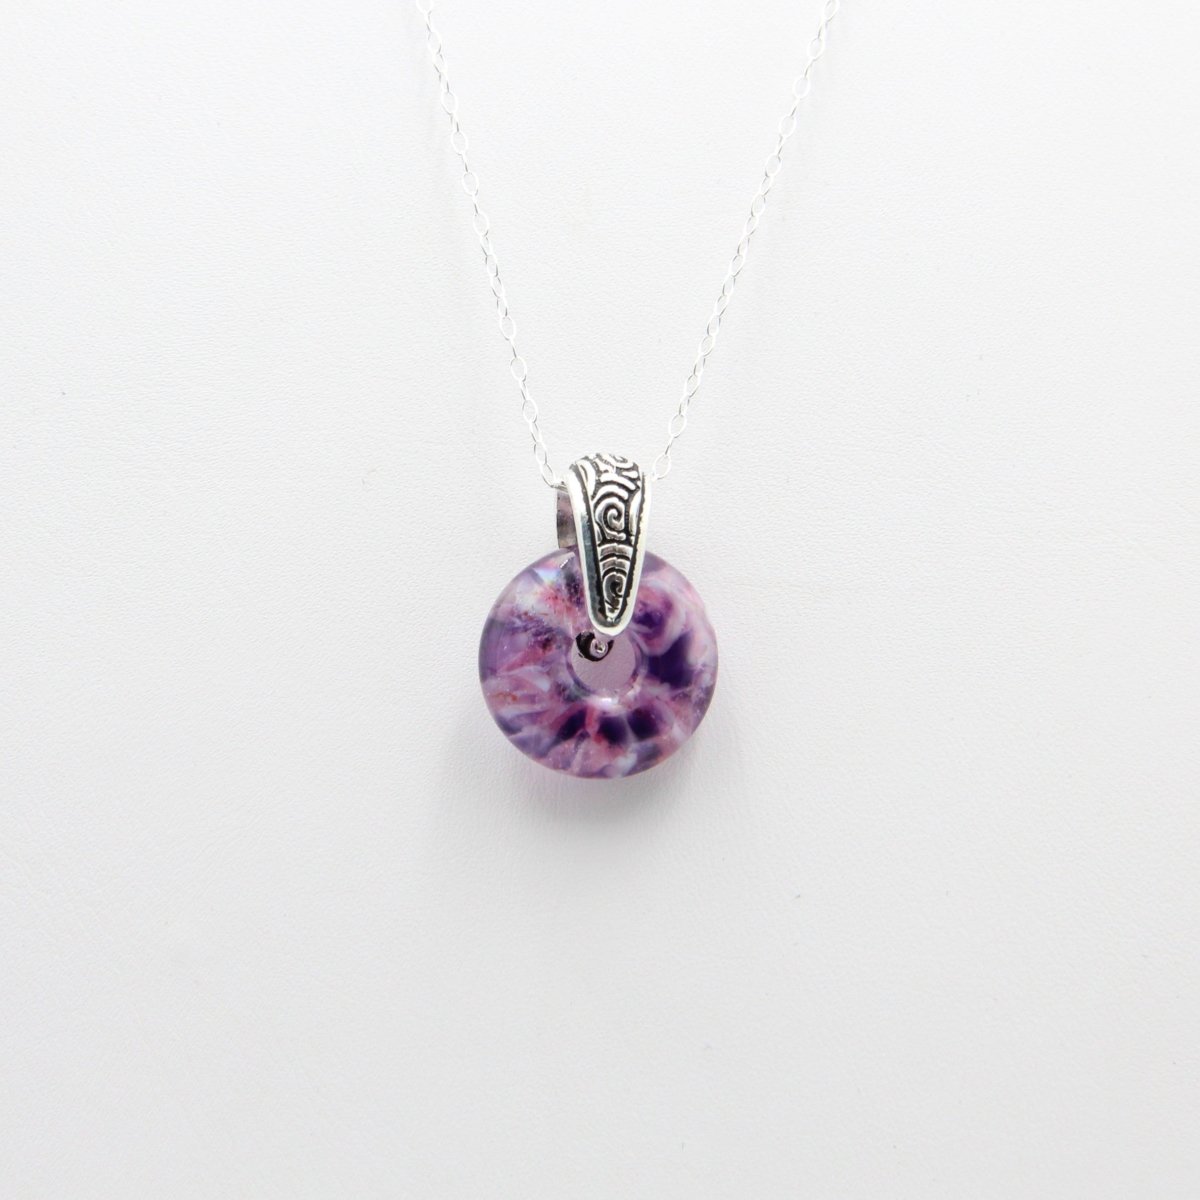 Delicate Speckled Purple and White Glass Pendant